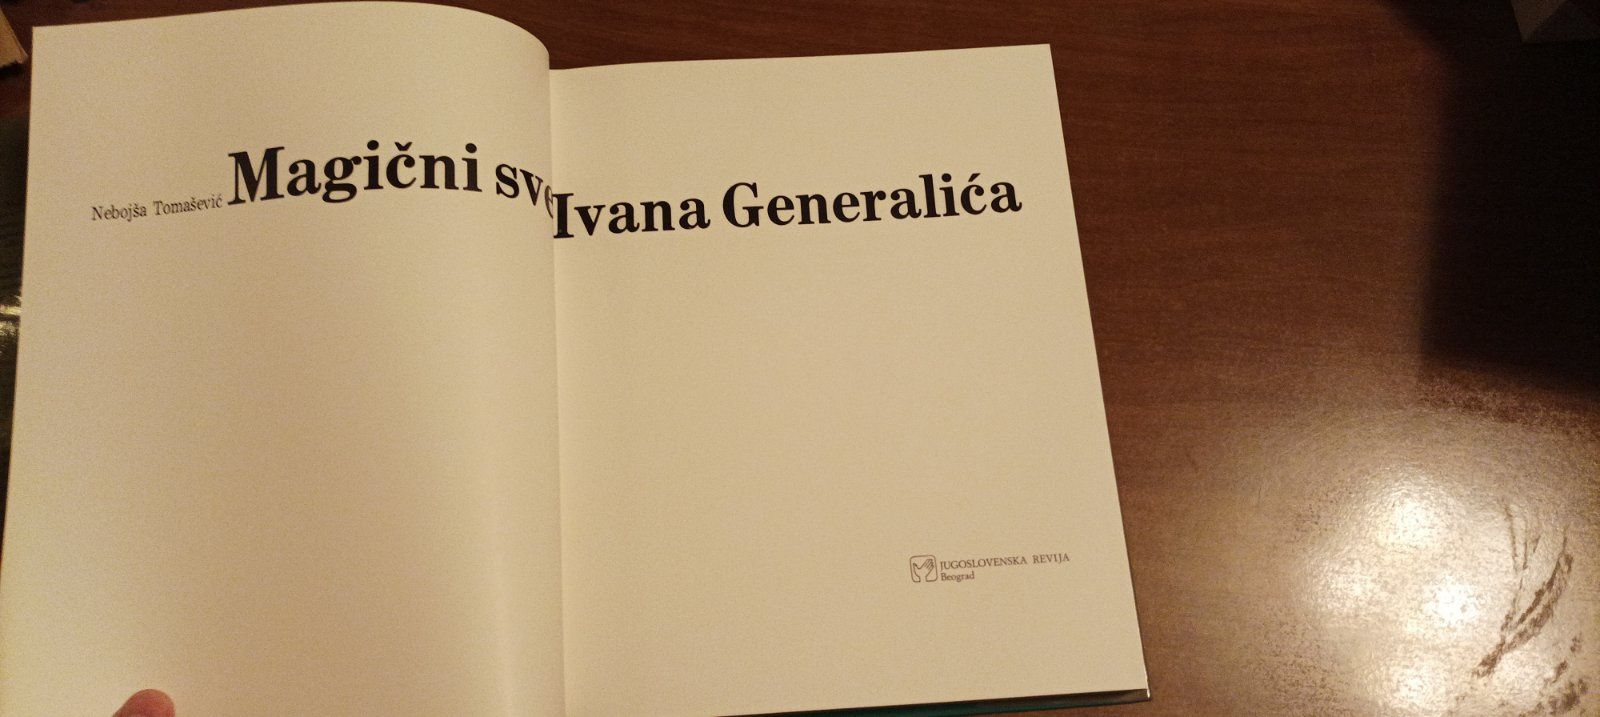 Альбом Ивана Генералича. Magicni svet Ivana Generalica